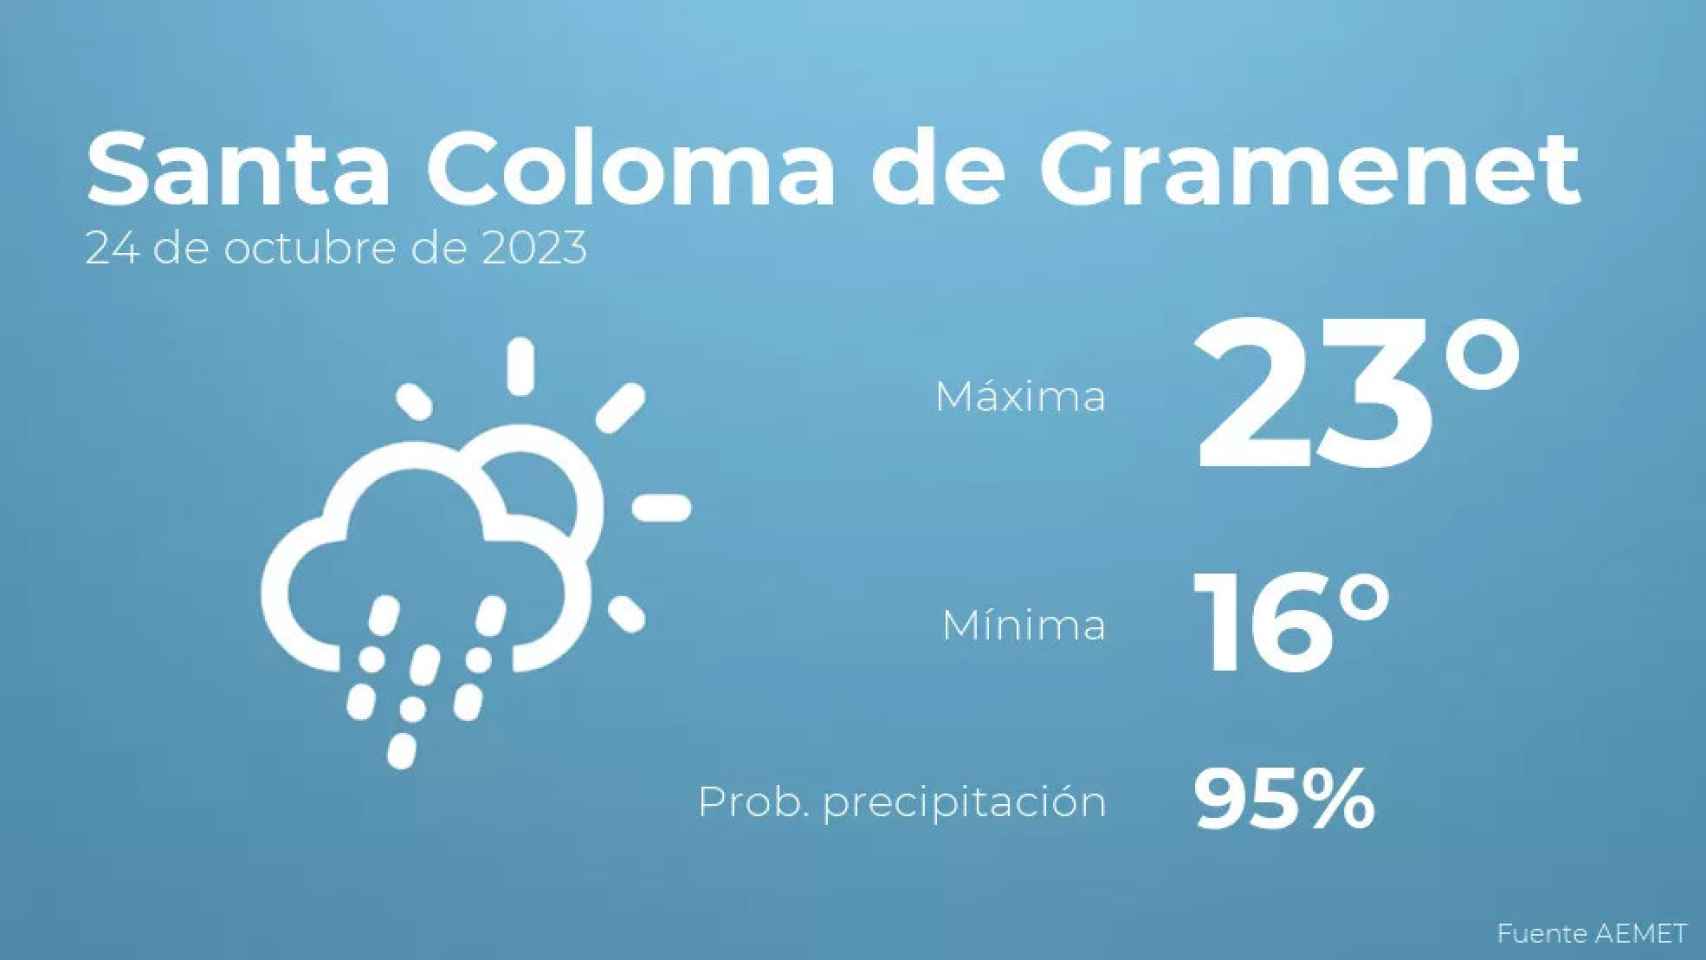 weather?weatherid=23&tempmax=23&tempmin=16&prep=95&city=Santa+Coloma+de+Gramenet&date=24+de+octubre+de+2023&client=CRG&data provider=aemet